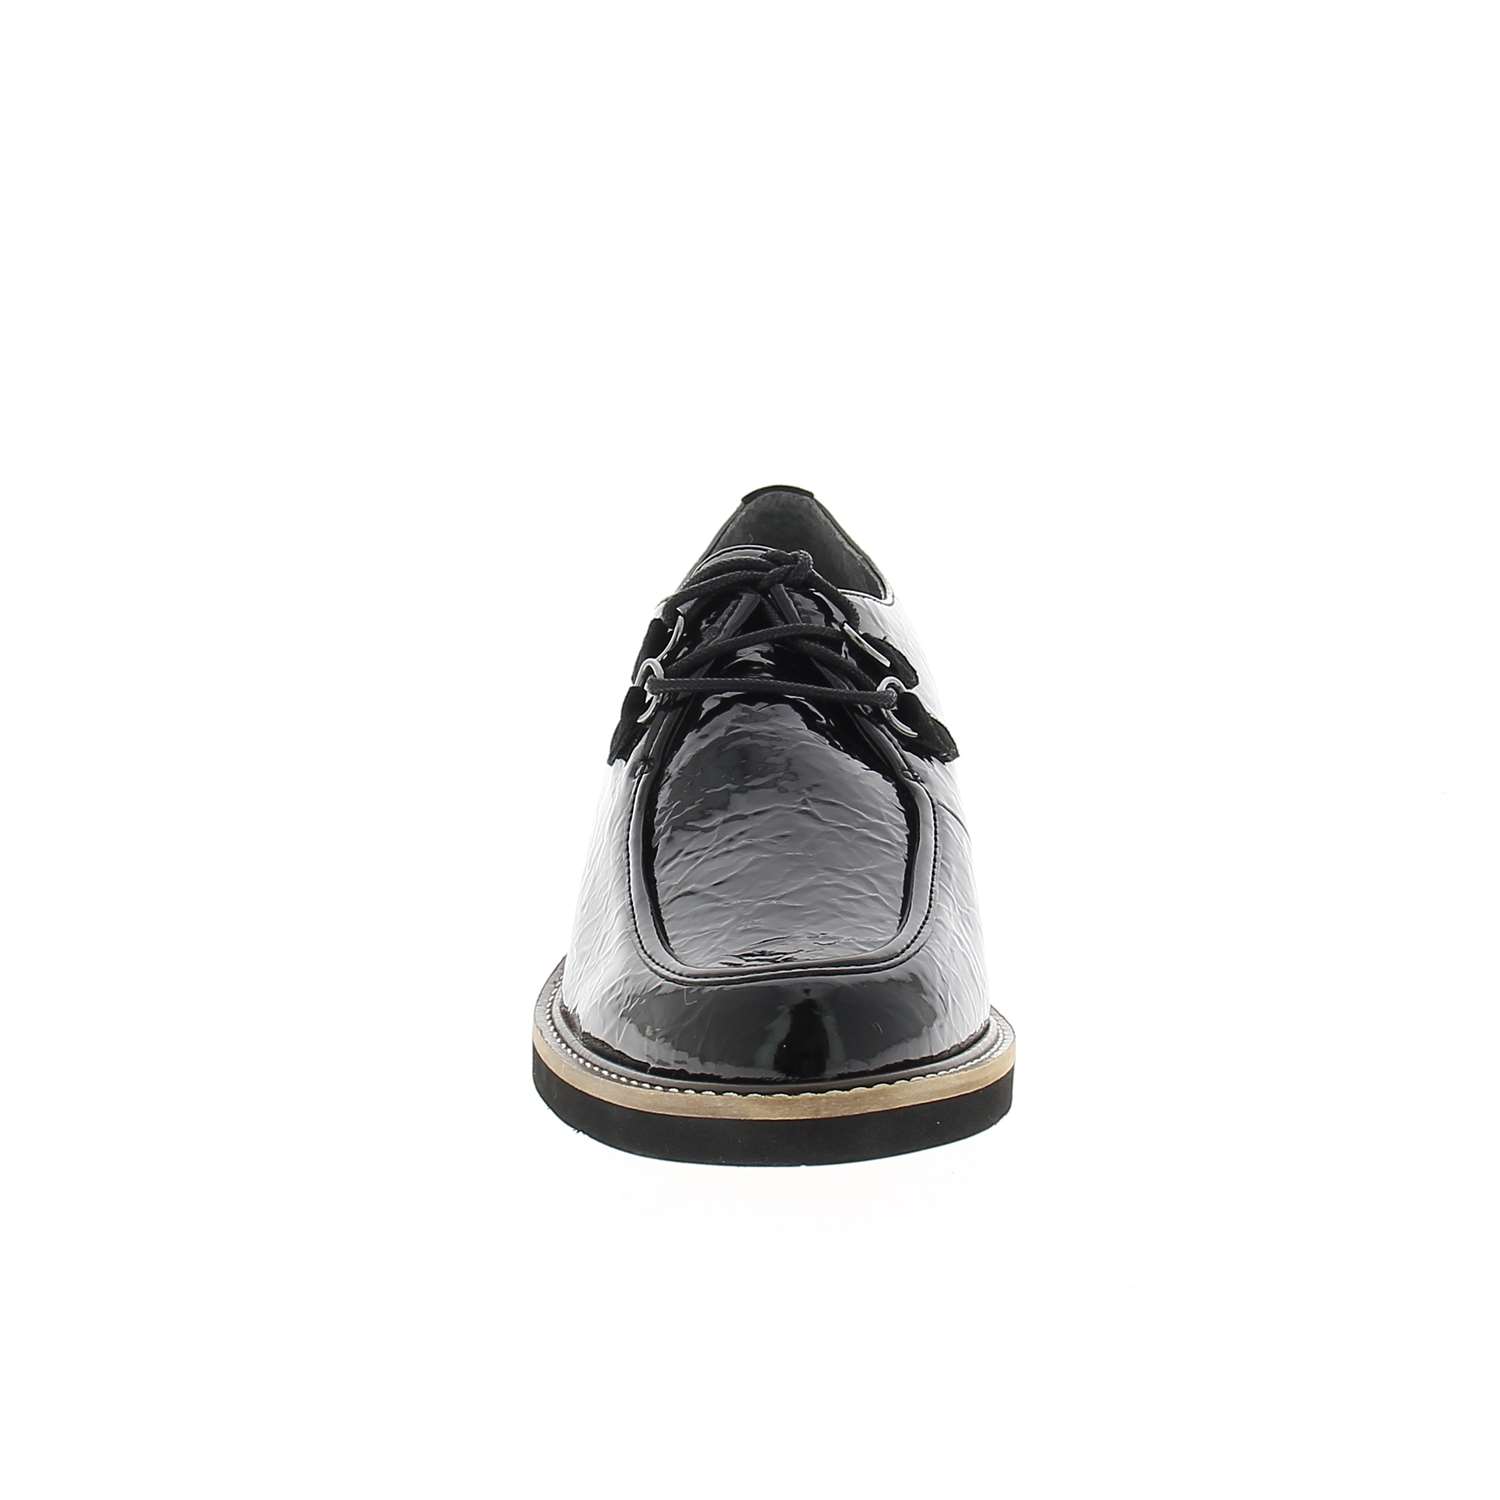 03 - CHOUPI - FUGITIVE - Chaussures à lacets - Cuir verni